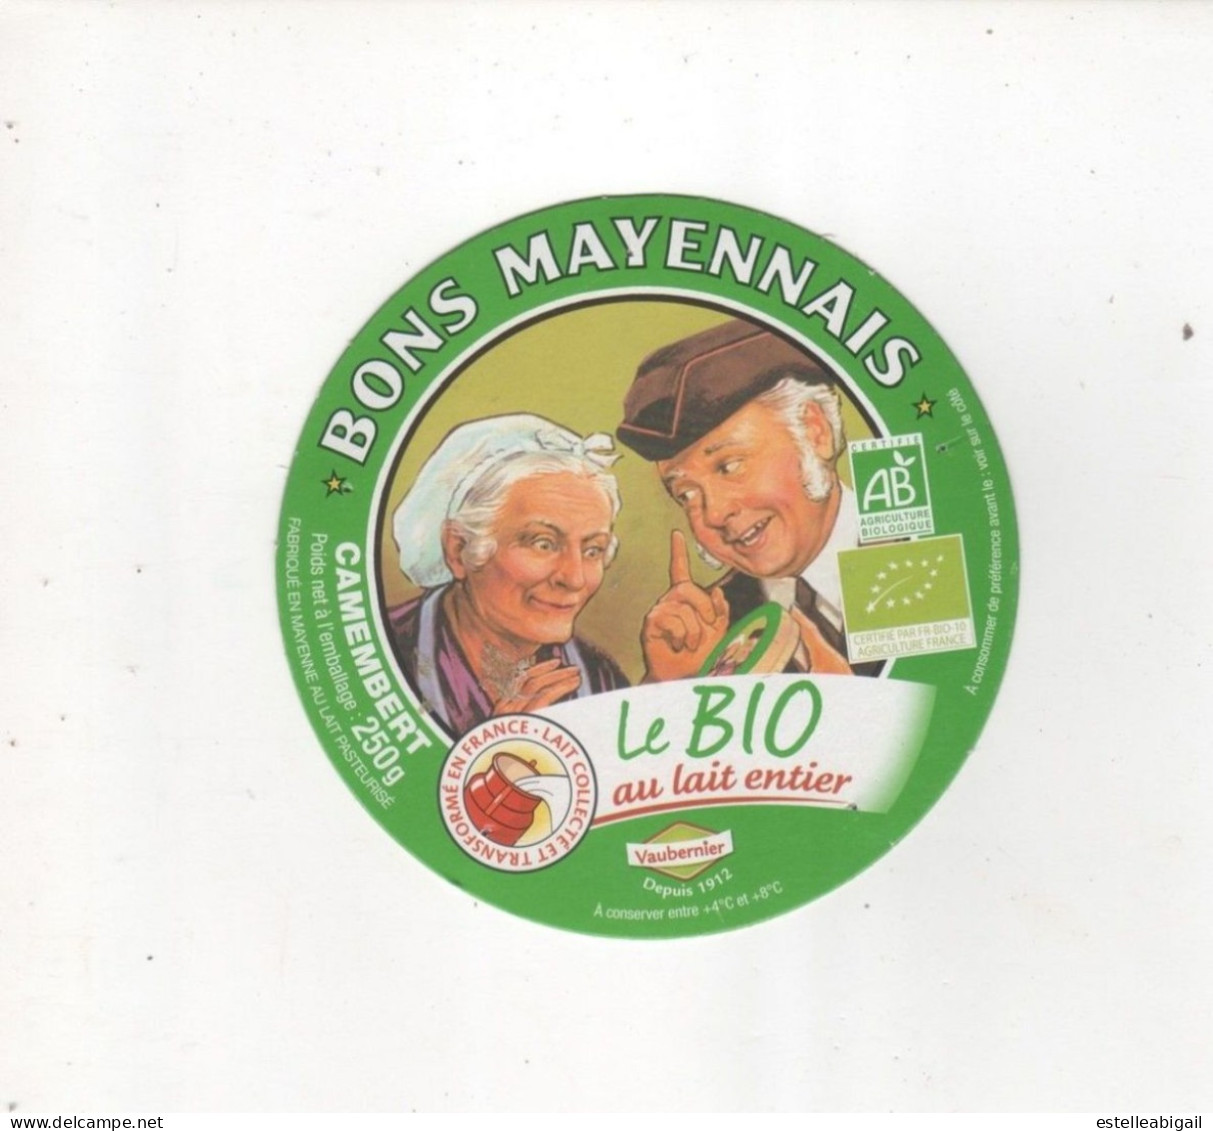 Bons Mayennais Le Bio - Käse